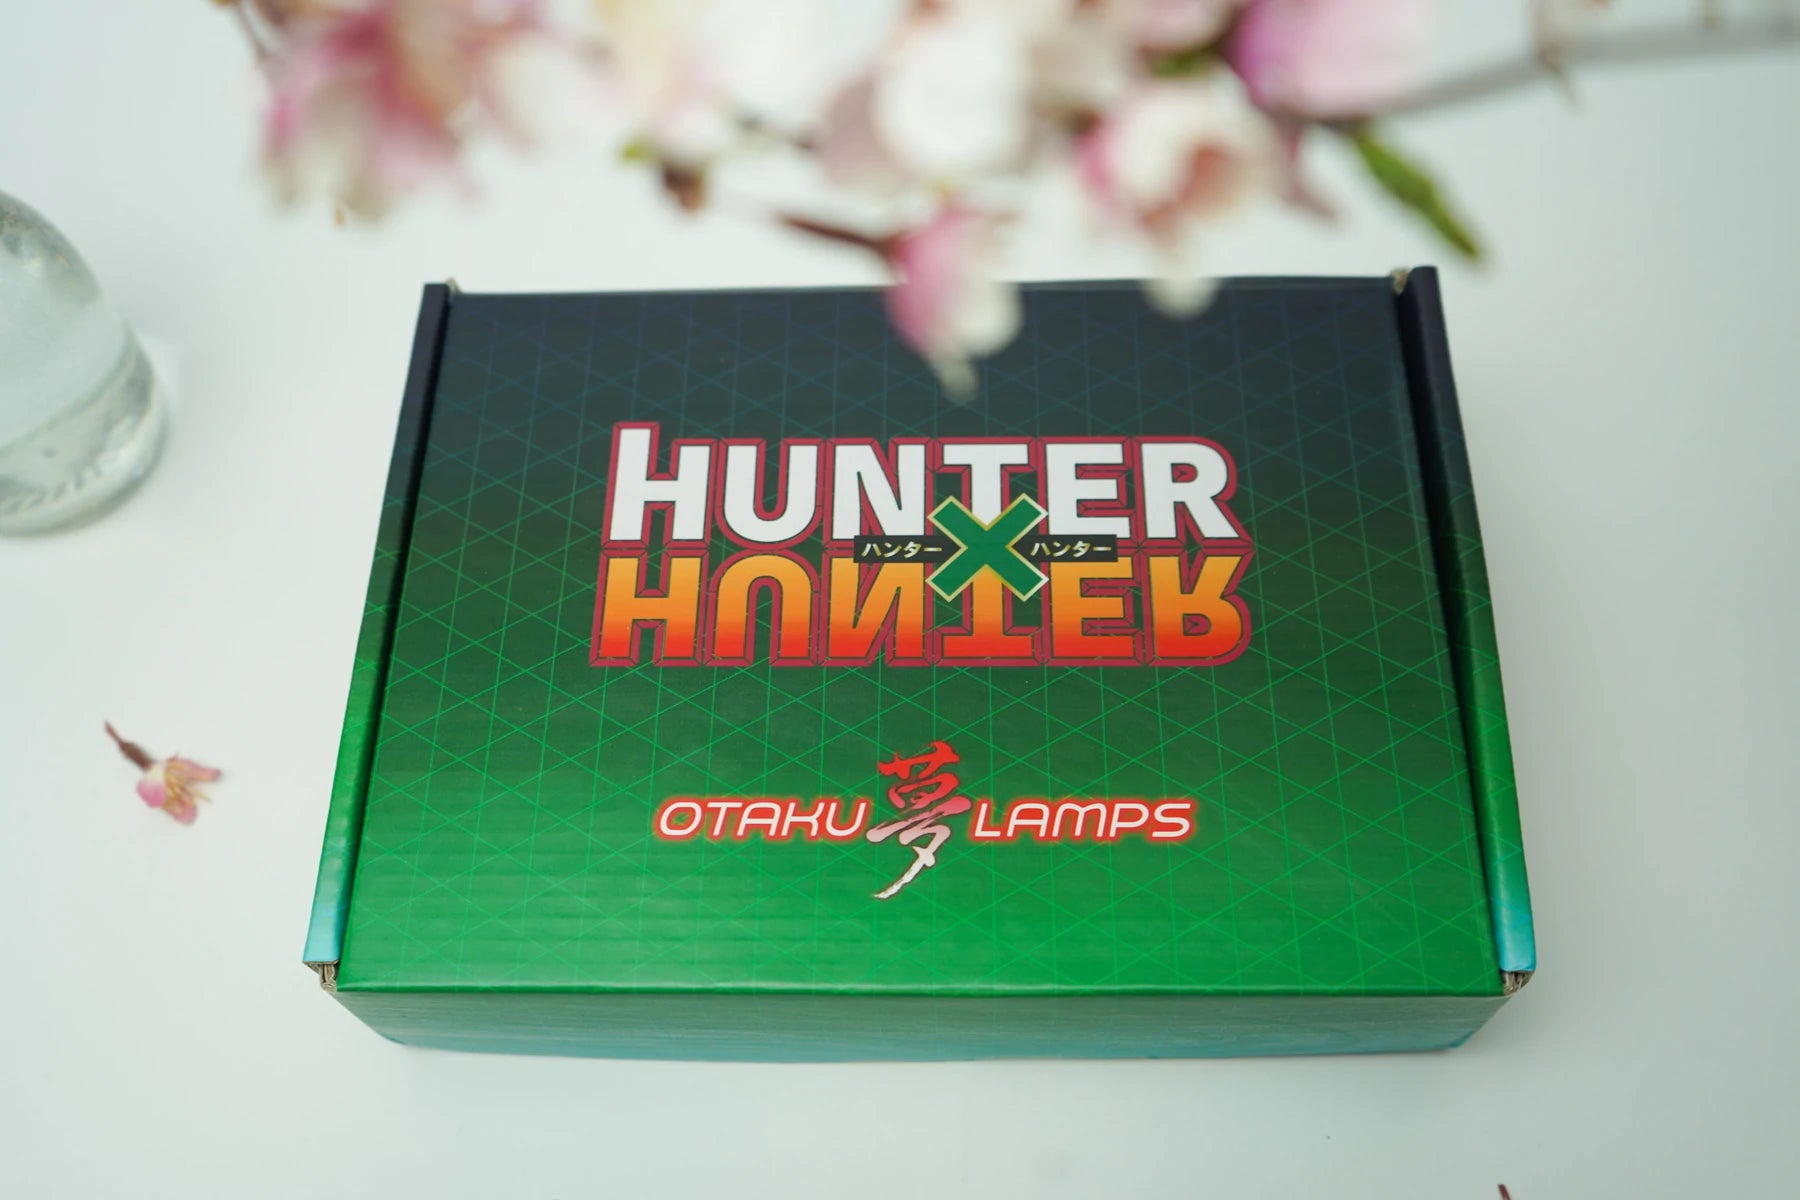 Hunter x Hunter - Chrollo Otaku Lamp image count 8